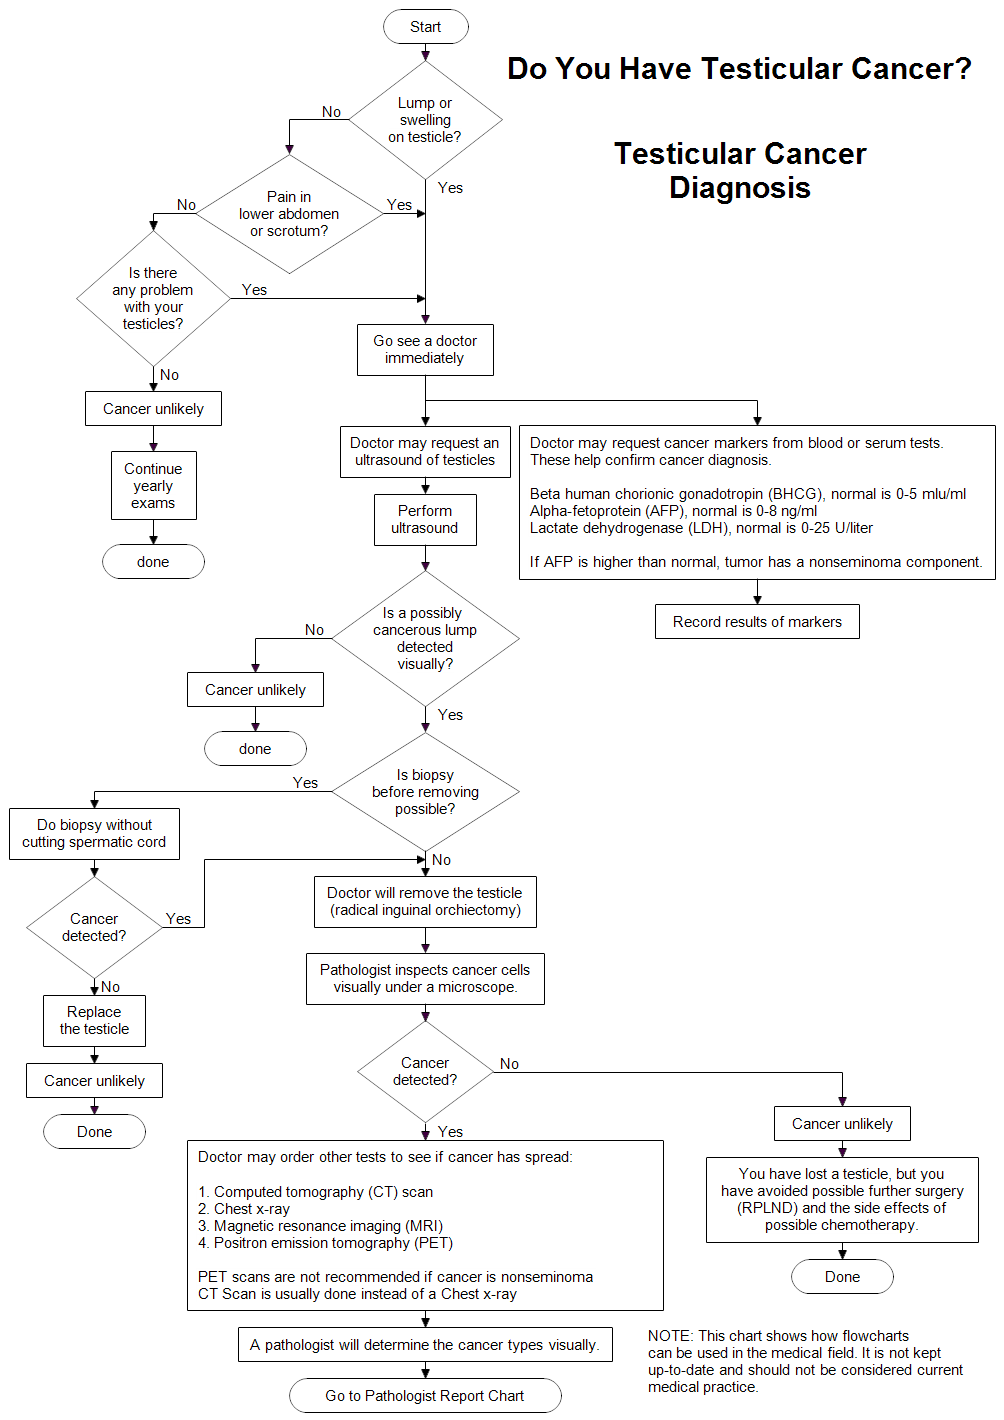 Testicular Cancer Diagnosis Flow Chart